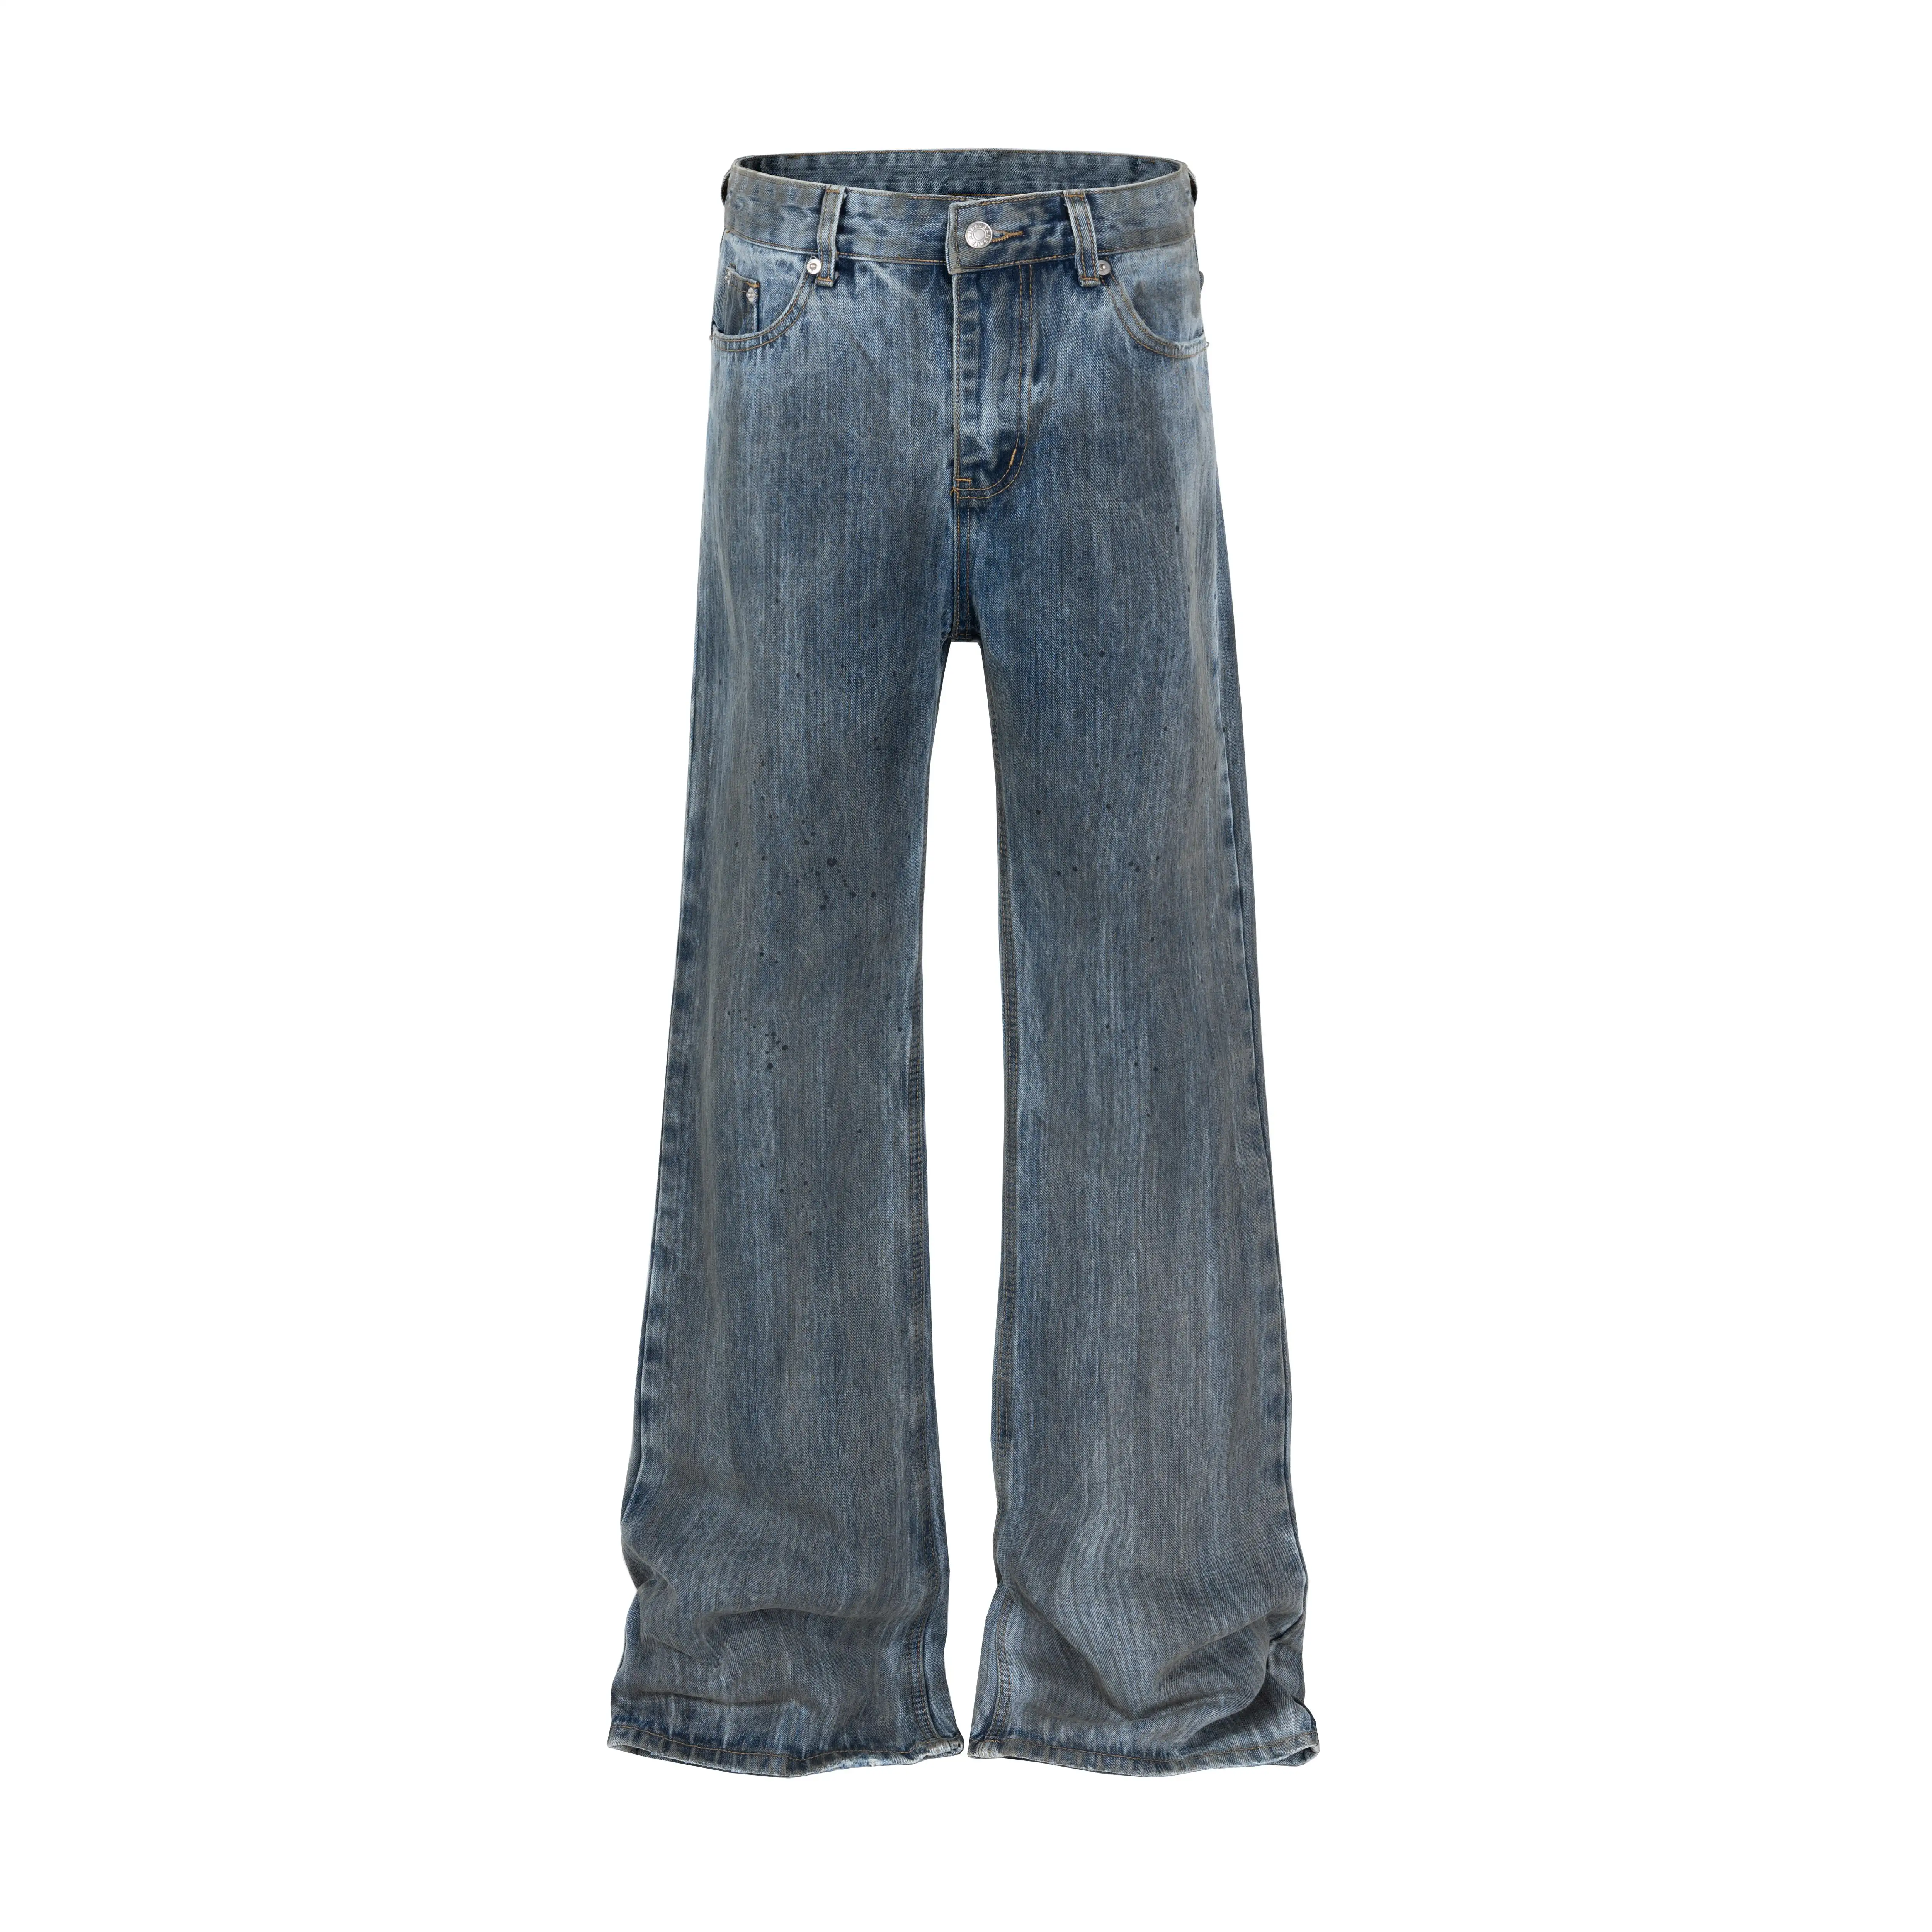 Rasa kustom antik biru dicuci buatan tangan bambu tertekan pria ramping fit bootcut jeans